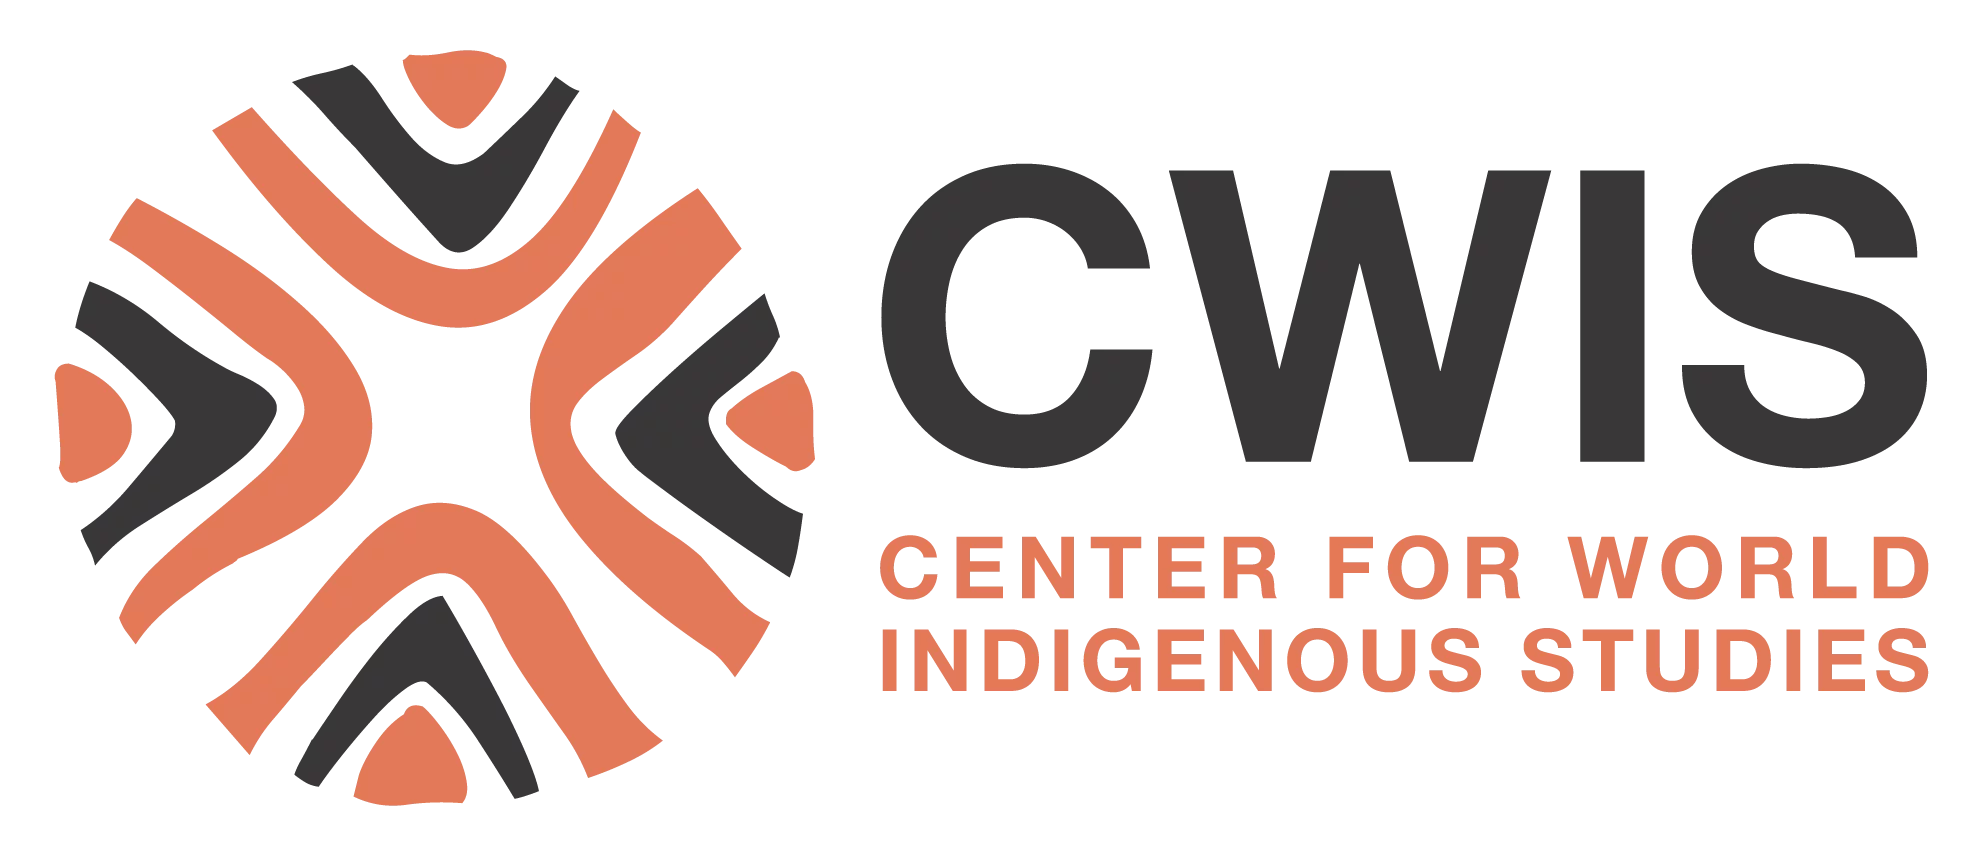 The Center for World Indigenous Studies